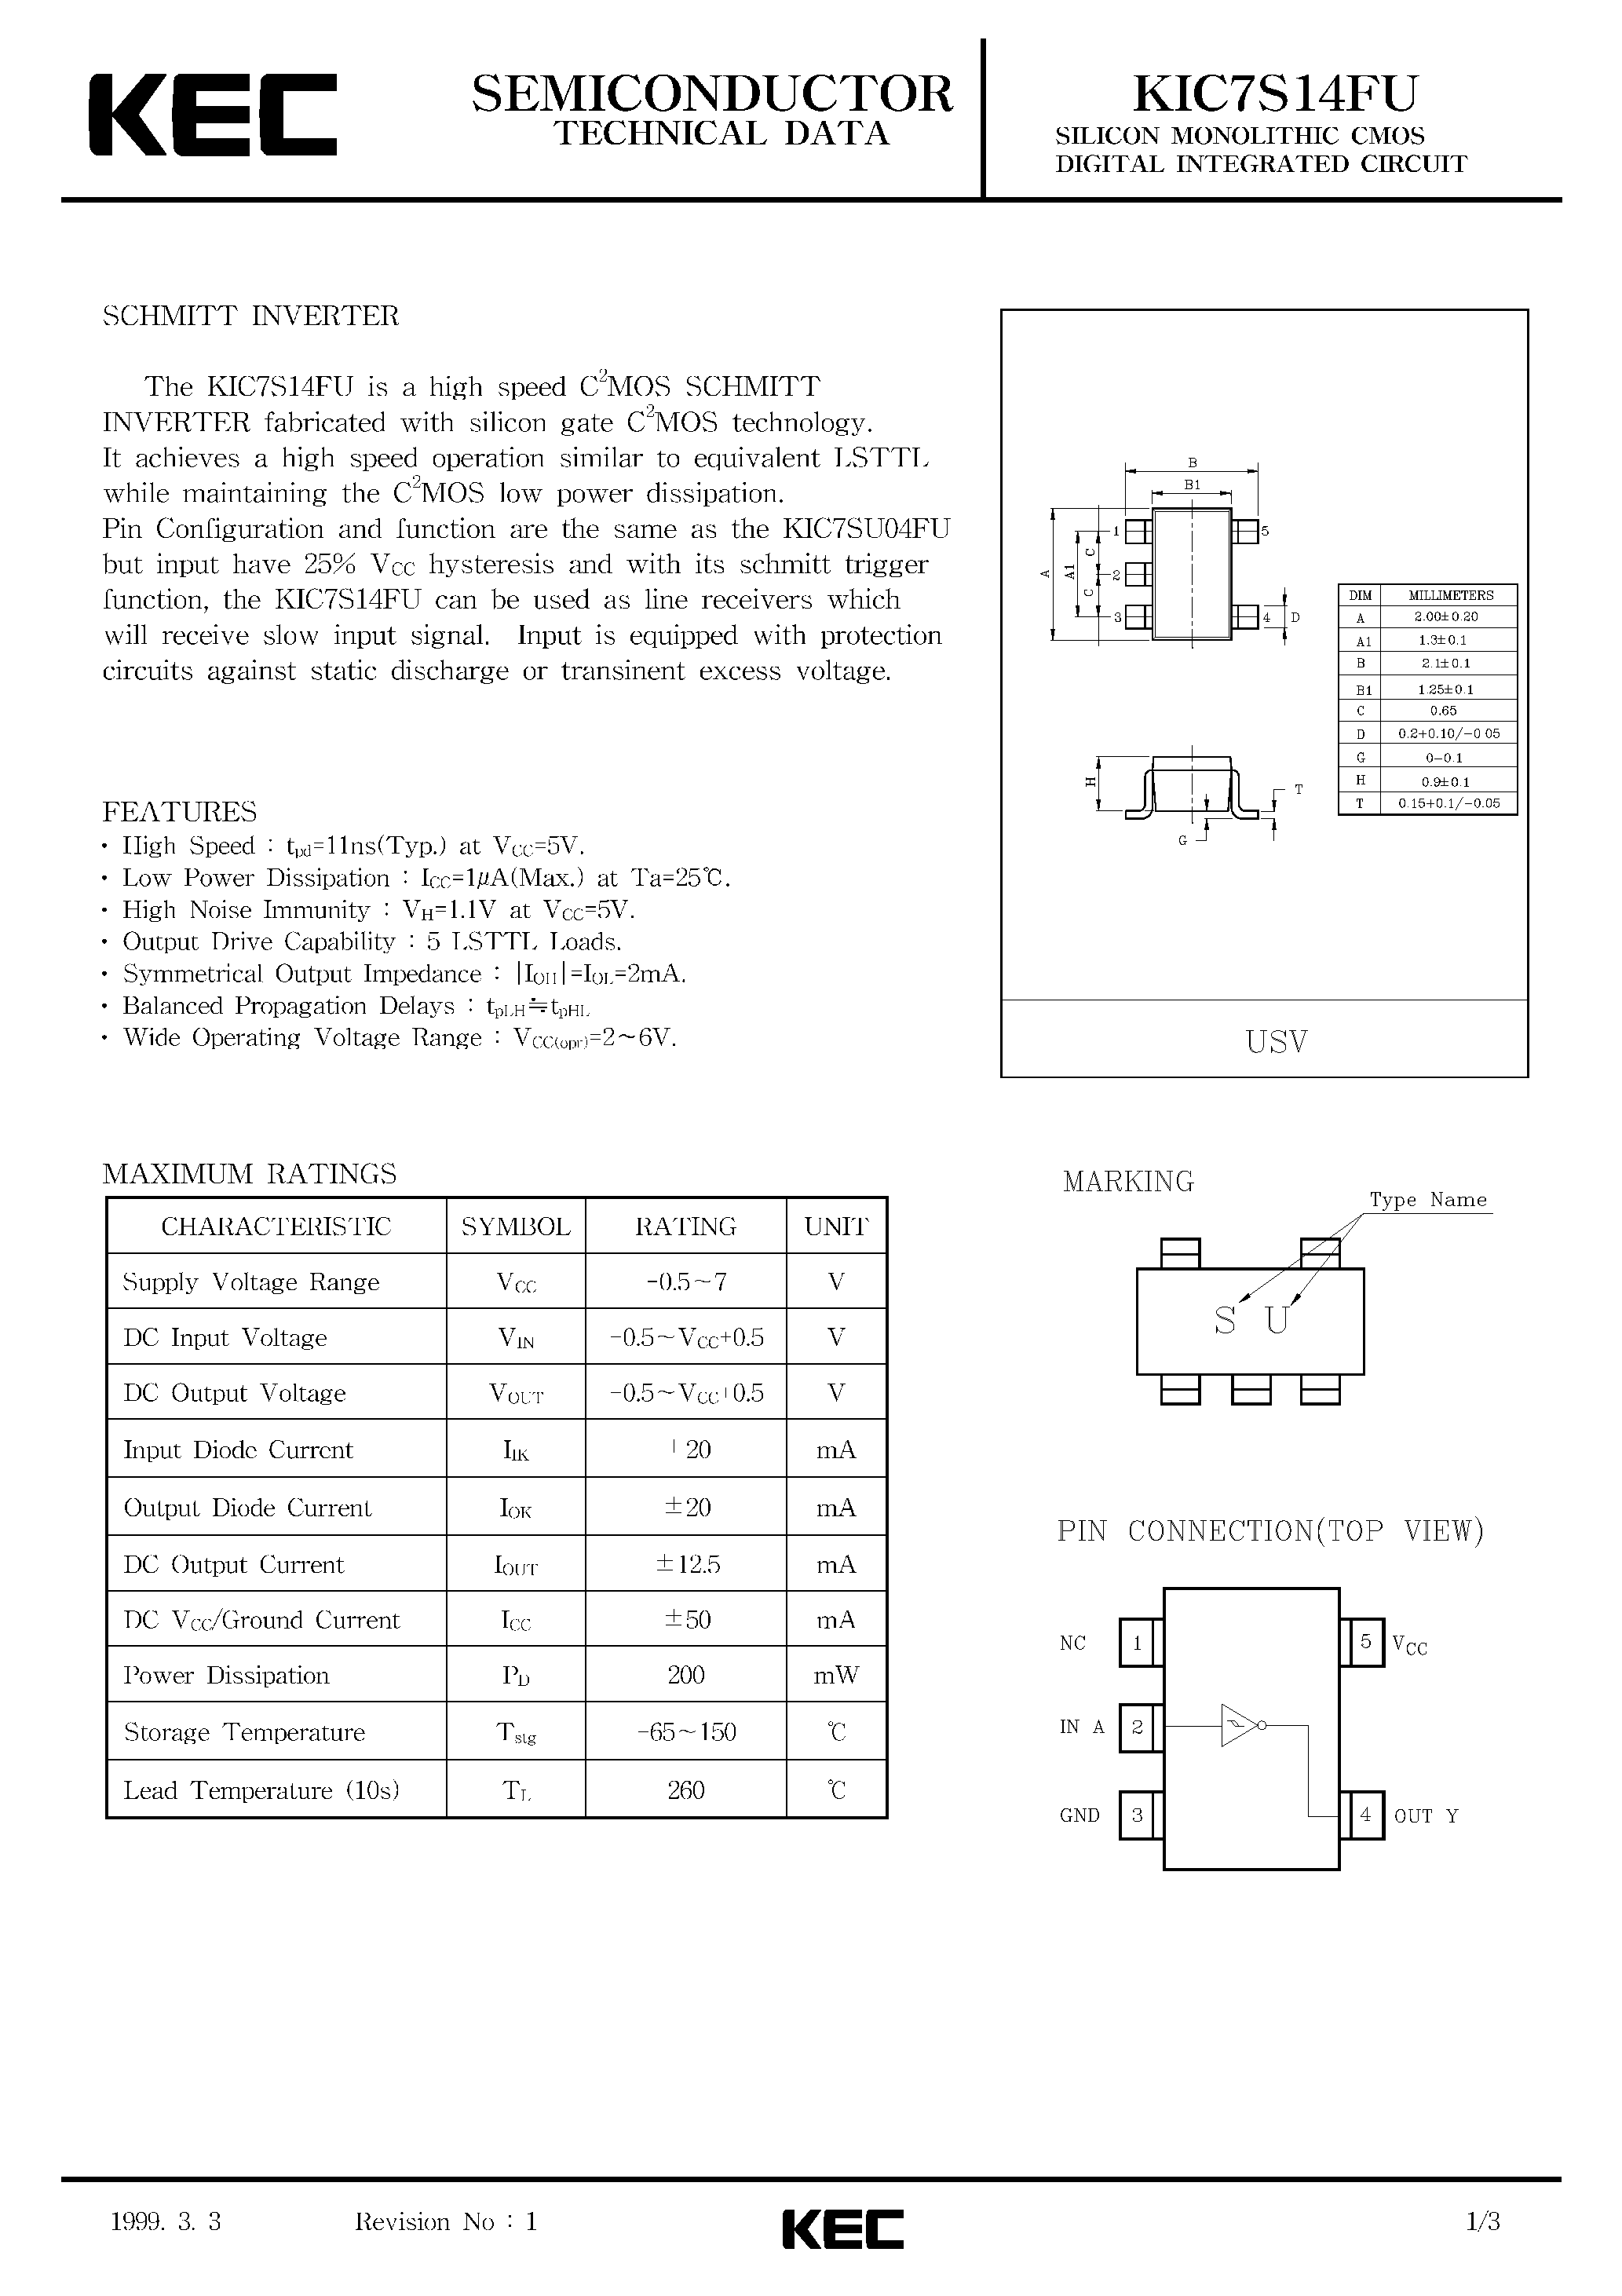 Даташит KIC7S14FU - SILICON MONOLITHIC CMOS DIGITAL INTEGRATED CIRCUIT (SCHMITT INVERTER) страница 1